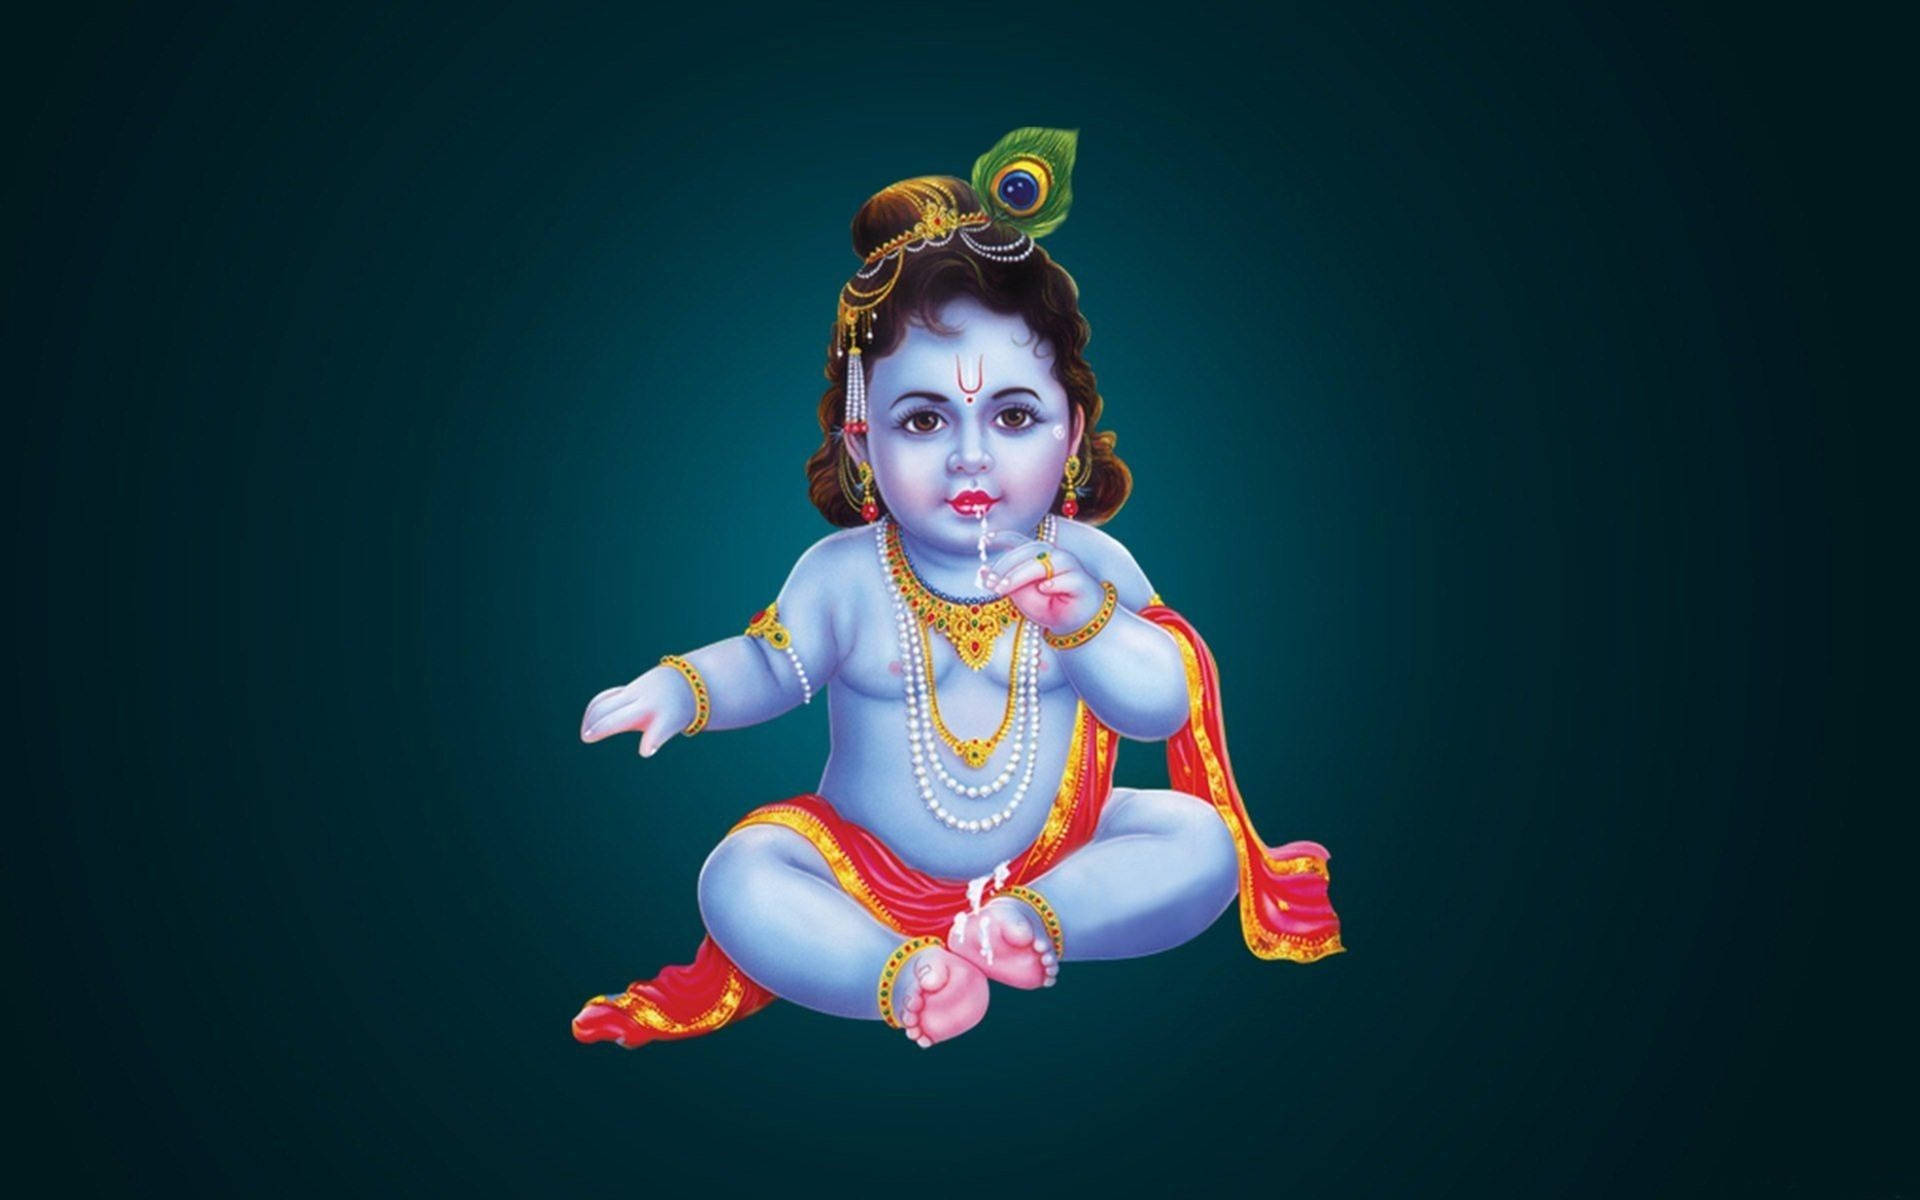 Baby Lord Krishna 4k Digital Artwork Background